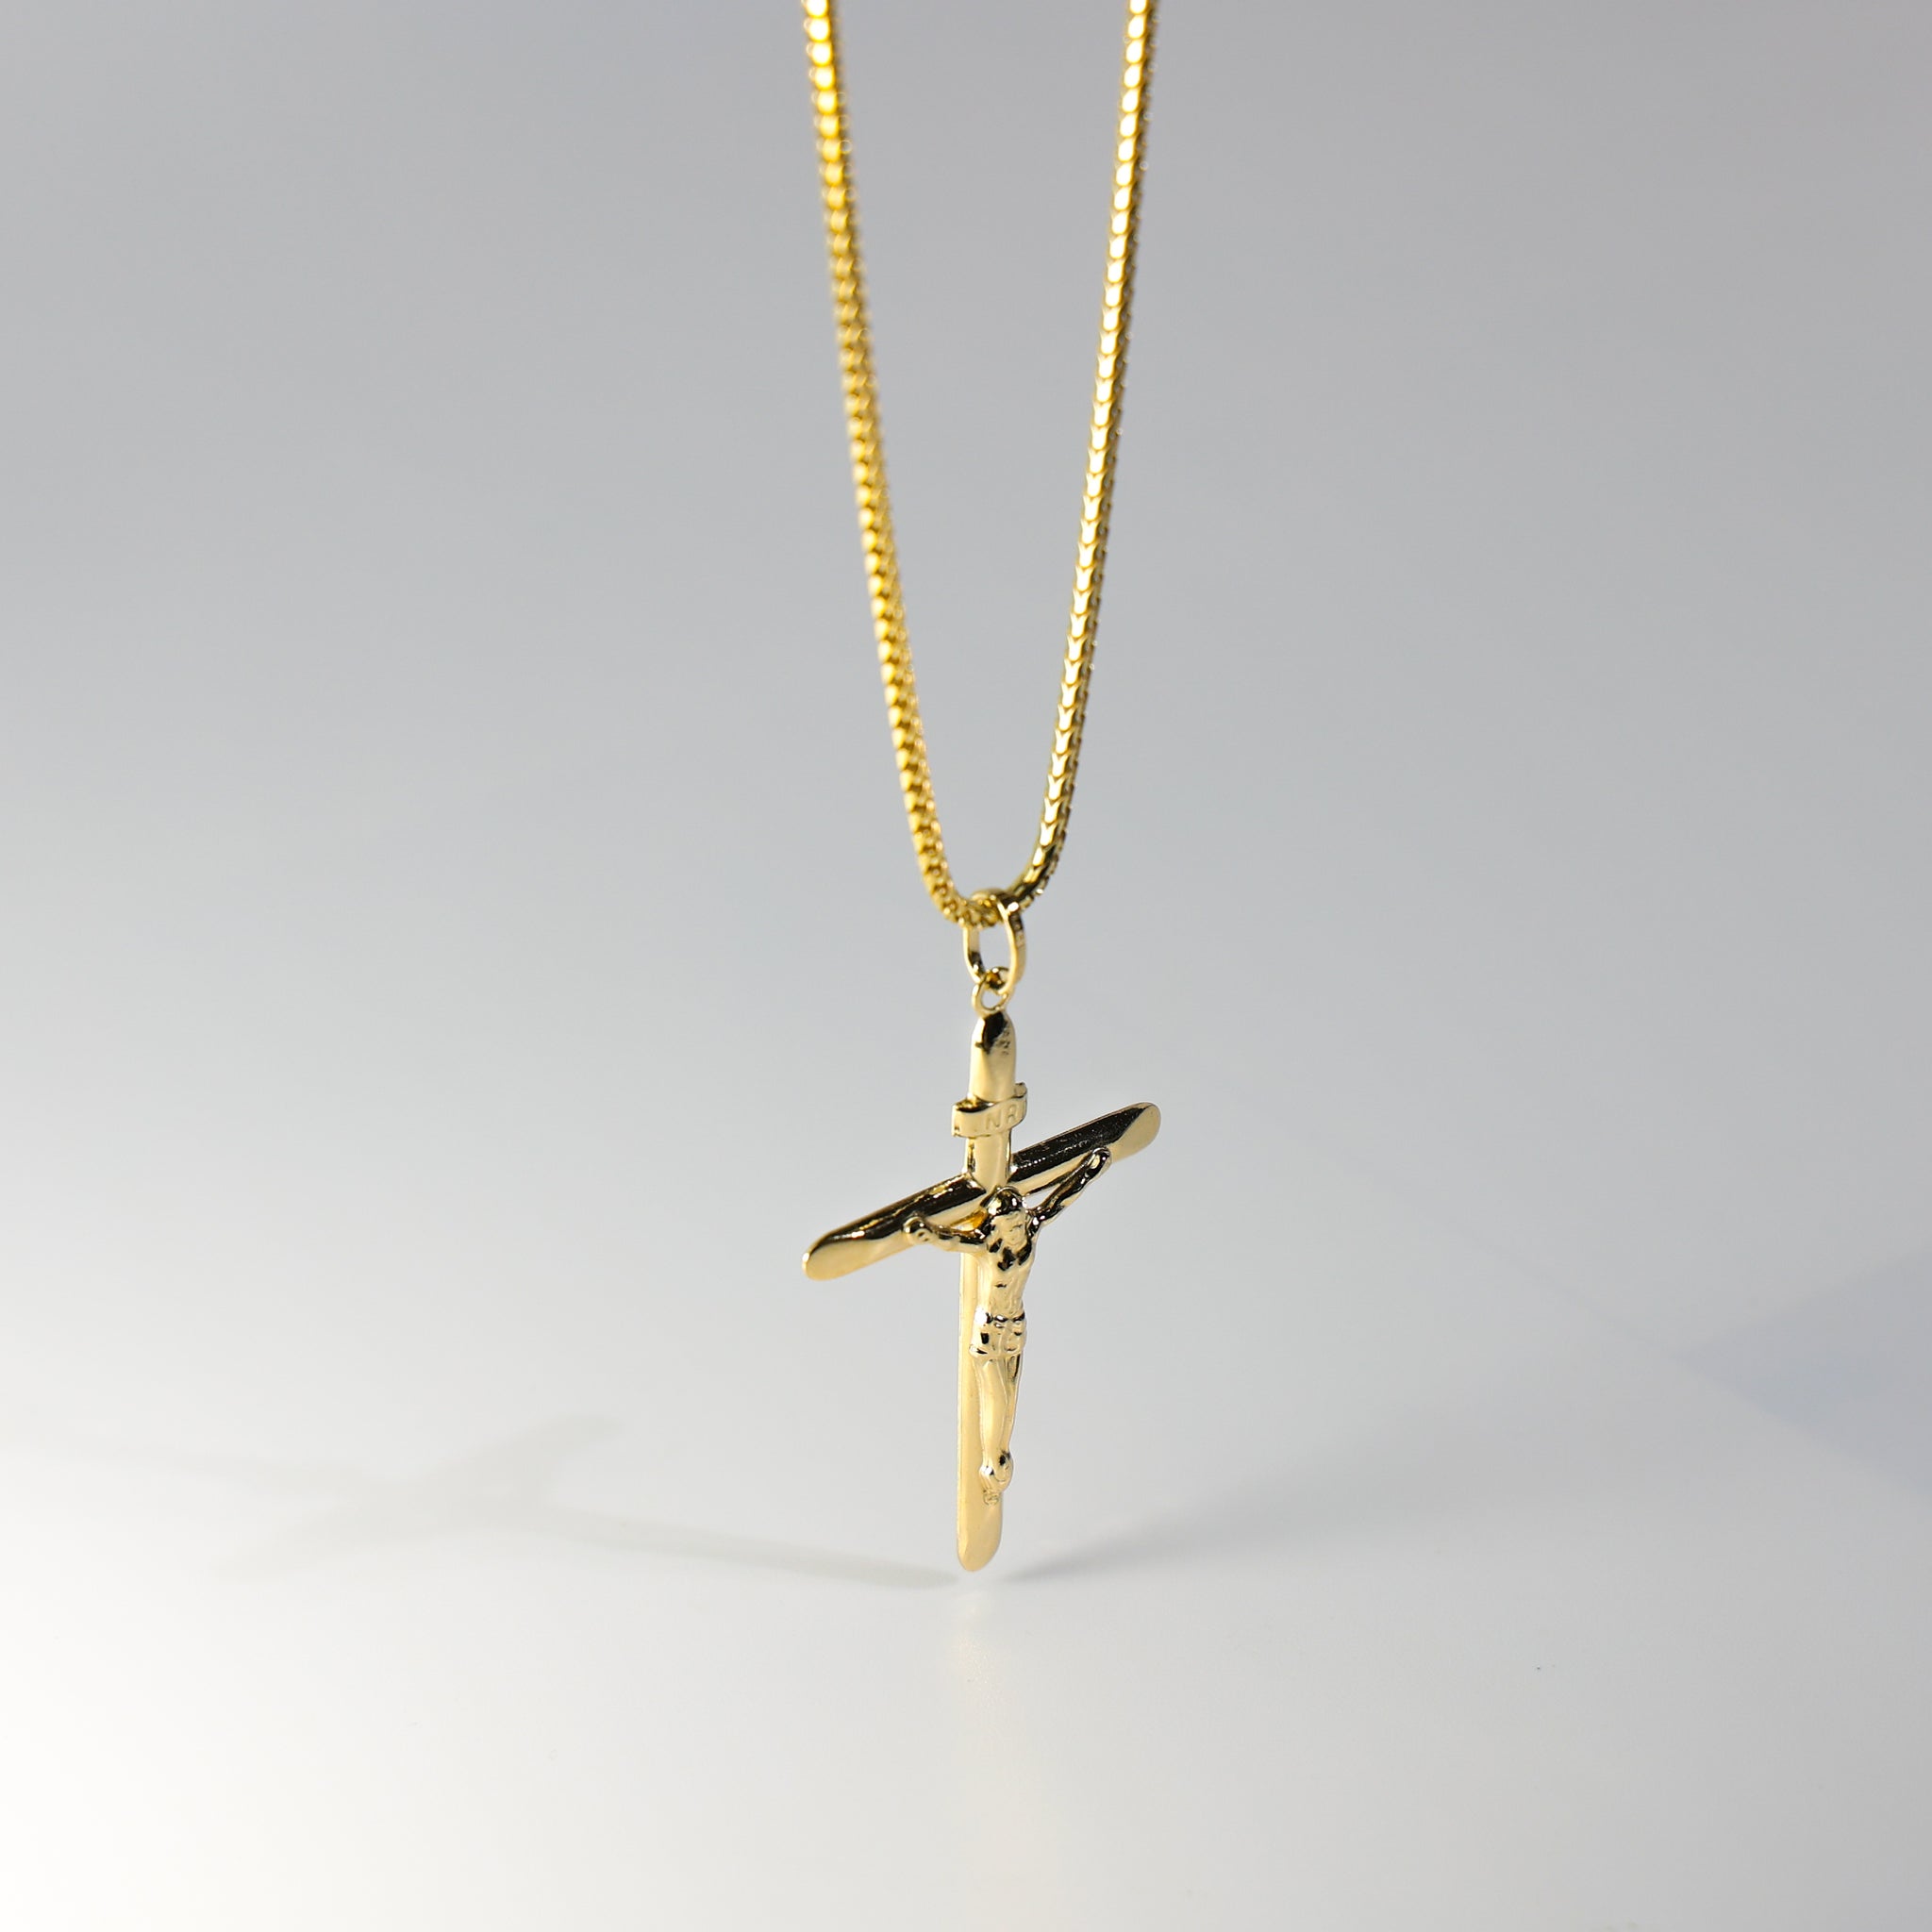 Gold Classic Beautiful Cross Pendant Model-0854 - Charlie & Co. Jewelry